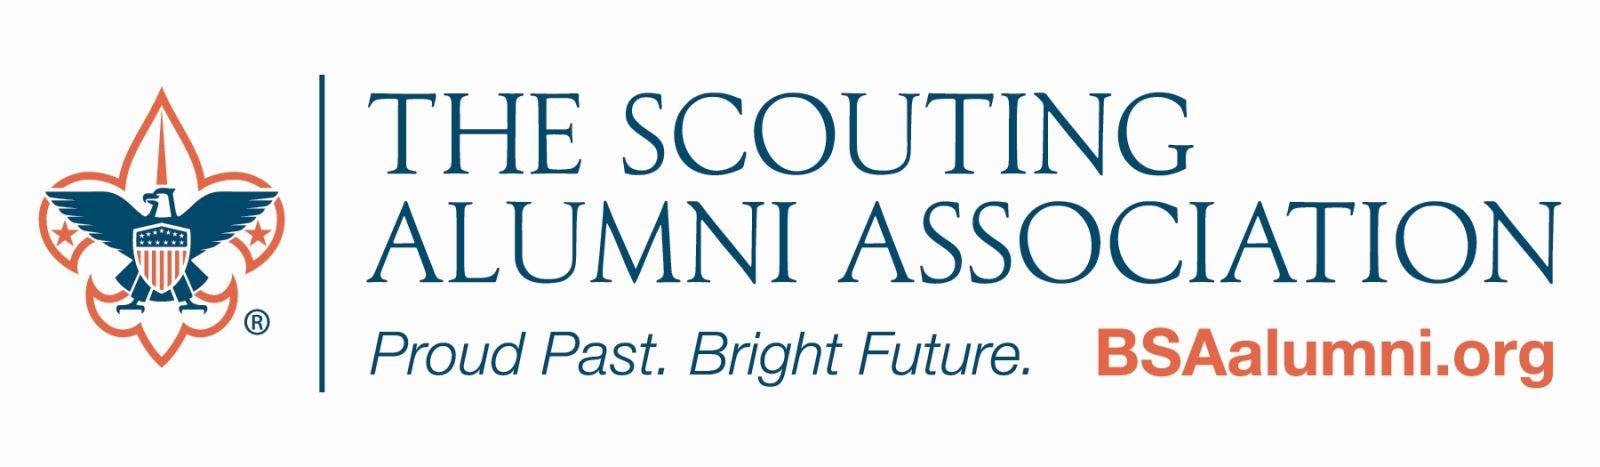 The Scouting Alumni Association